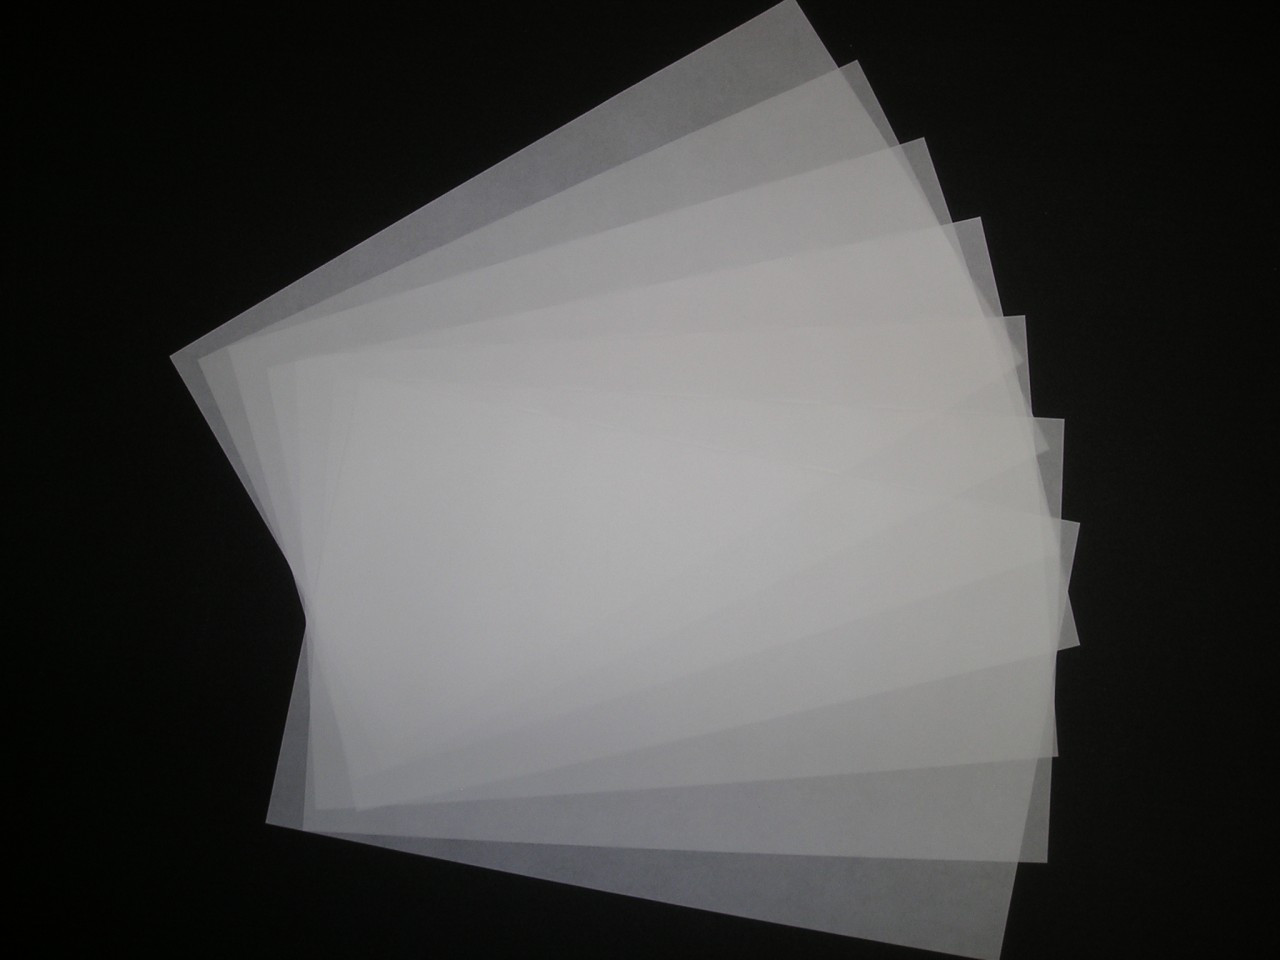 11 X 17 VELLUM Translucency Paper for Laser Printers